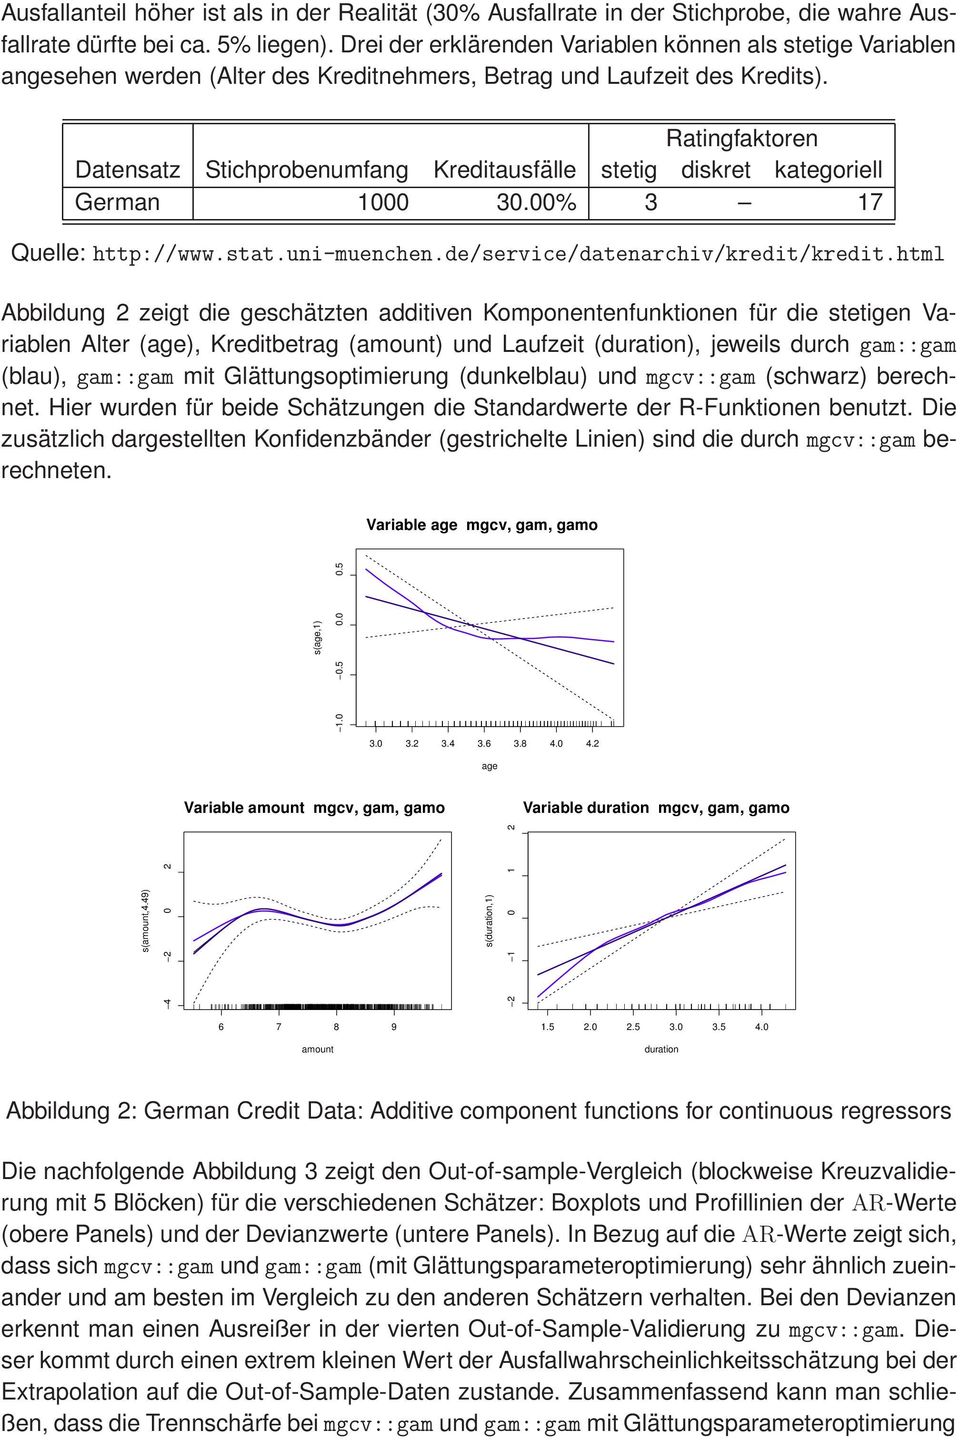 Ratingfaktoren Datensatz Stichprobenumfang Kreditausfälle stetig diskret kategoriell German 1000 30.00% 3 17 Quelle: http://www.stat.uni-muenchen.de/service/datenarchiv/kredit/kredit.